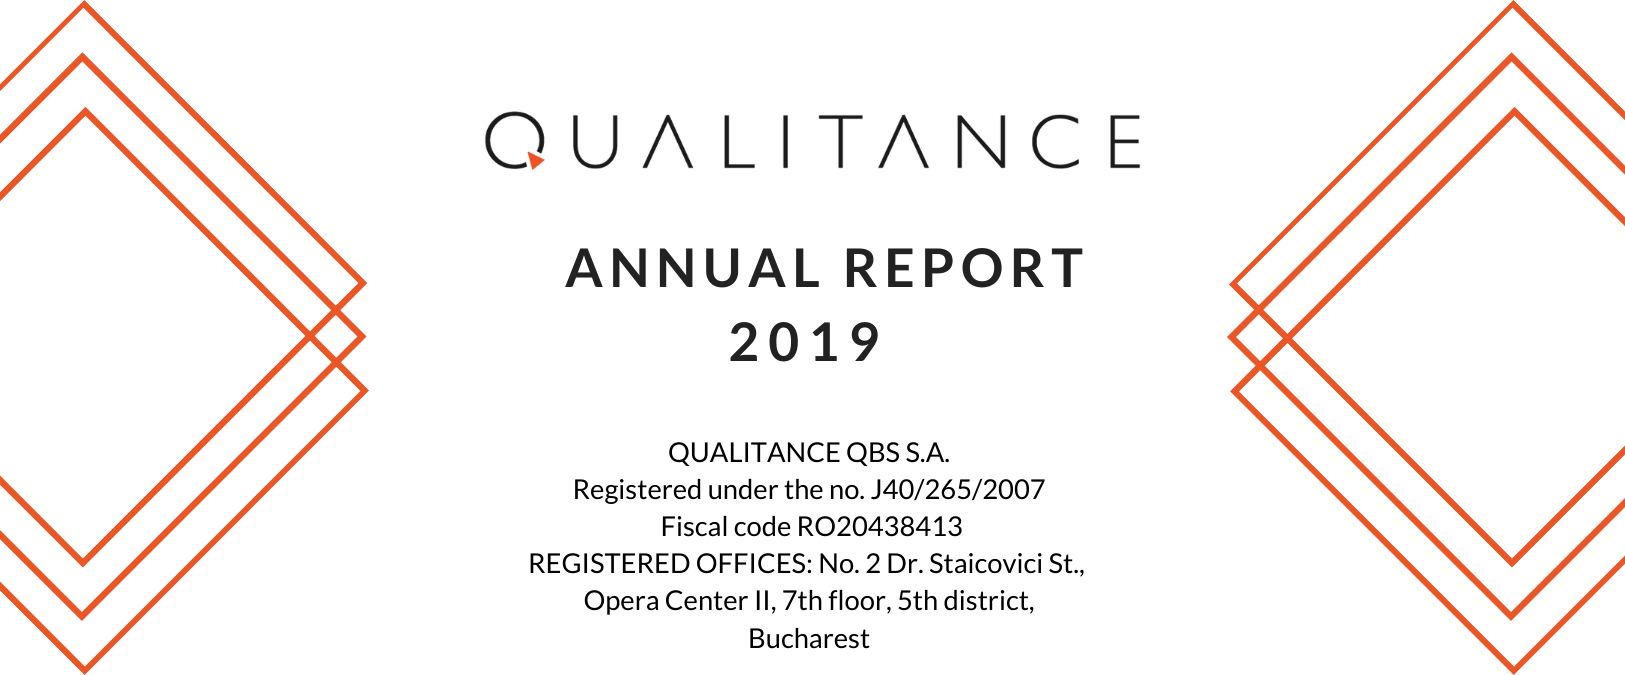 QUALITANCE 2019 Annual Report